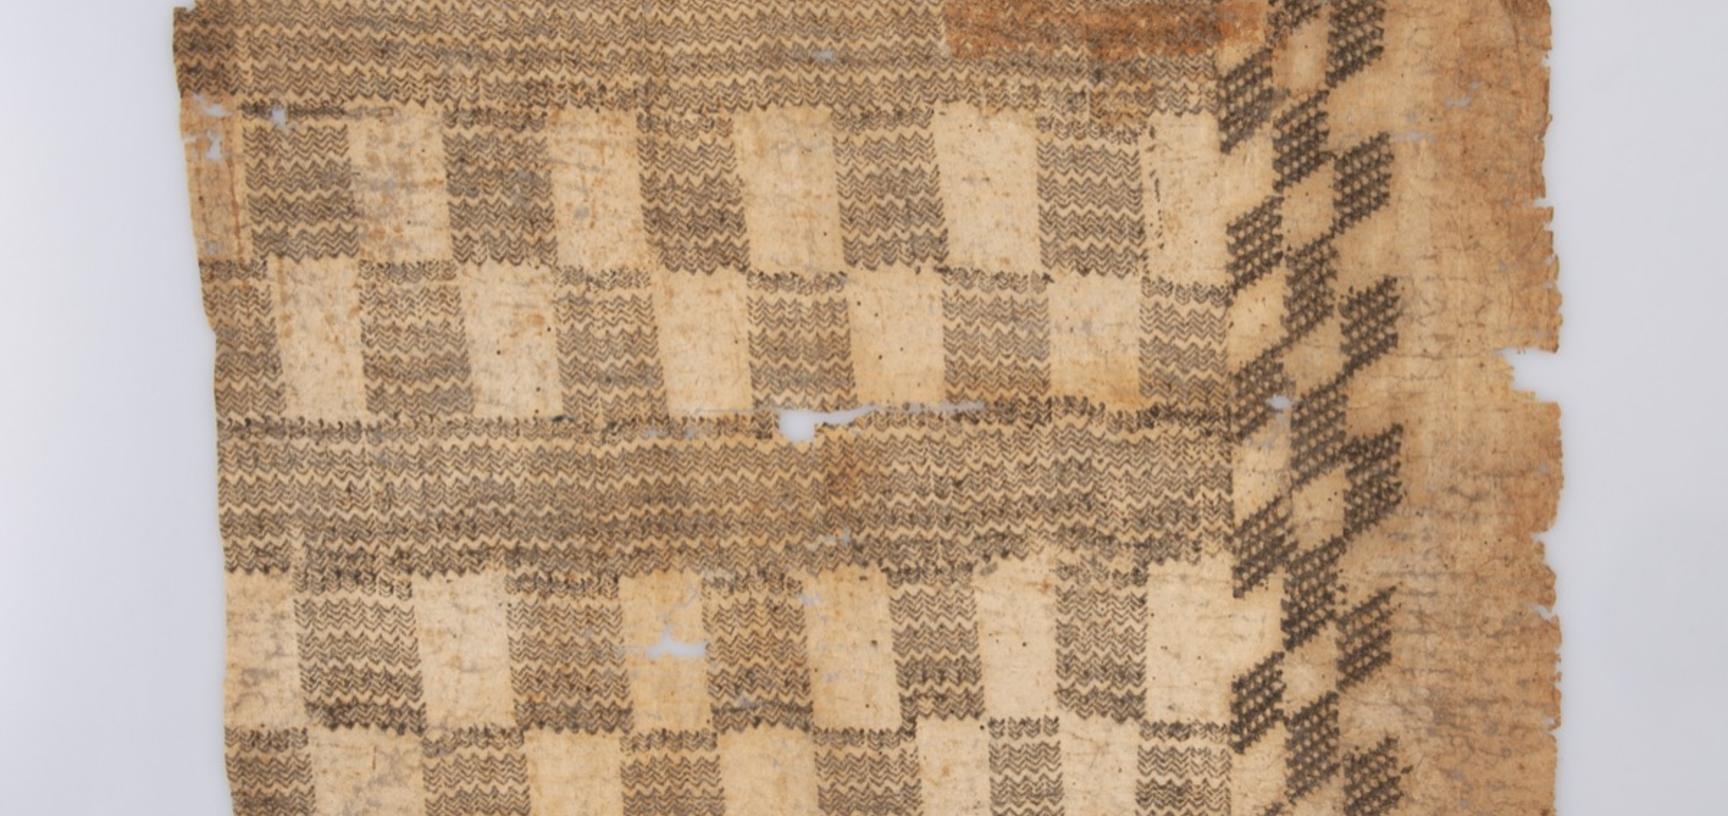 Kapa (refined bark cloth), Hawaiian Islands, made during or before 1828.